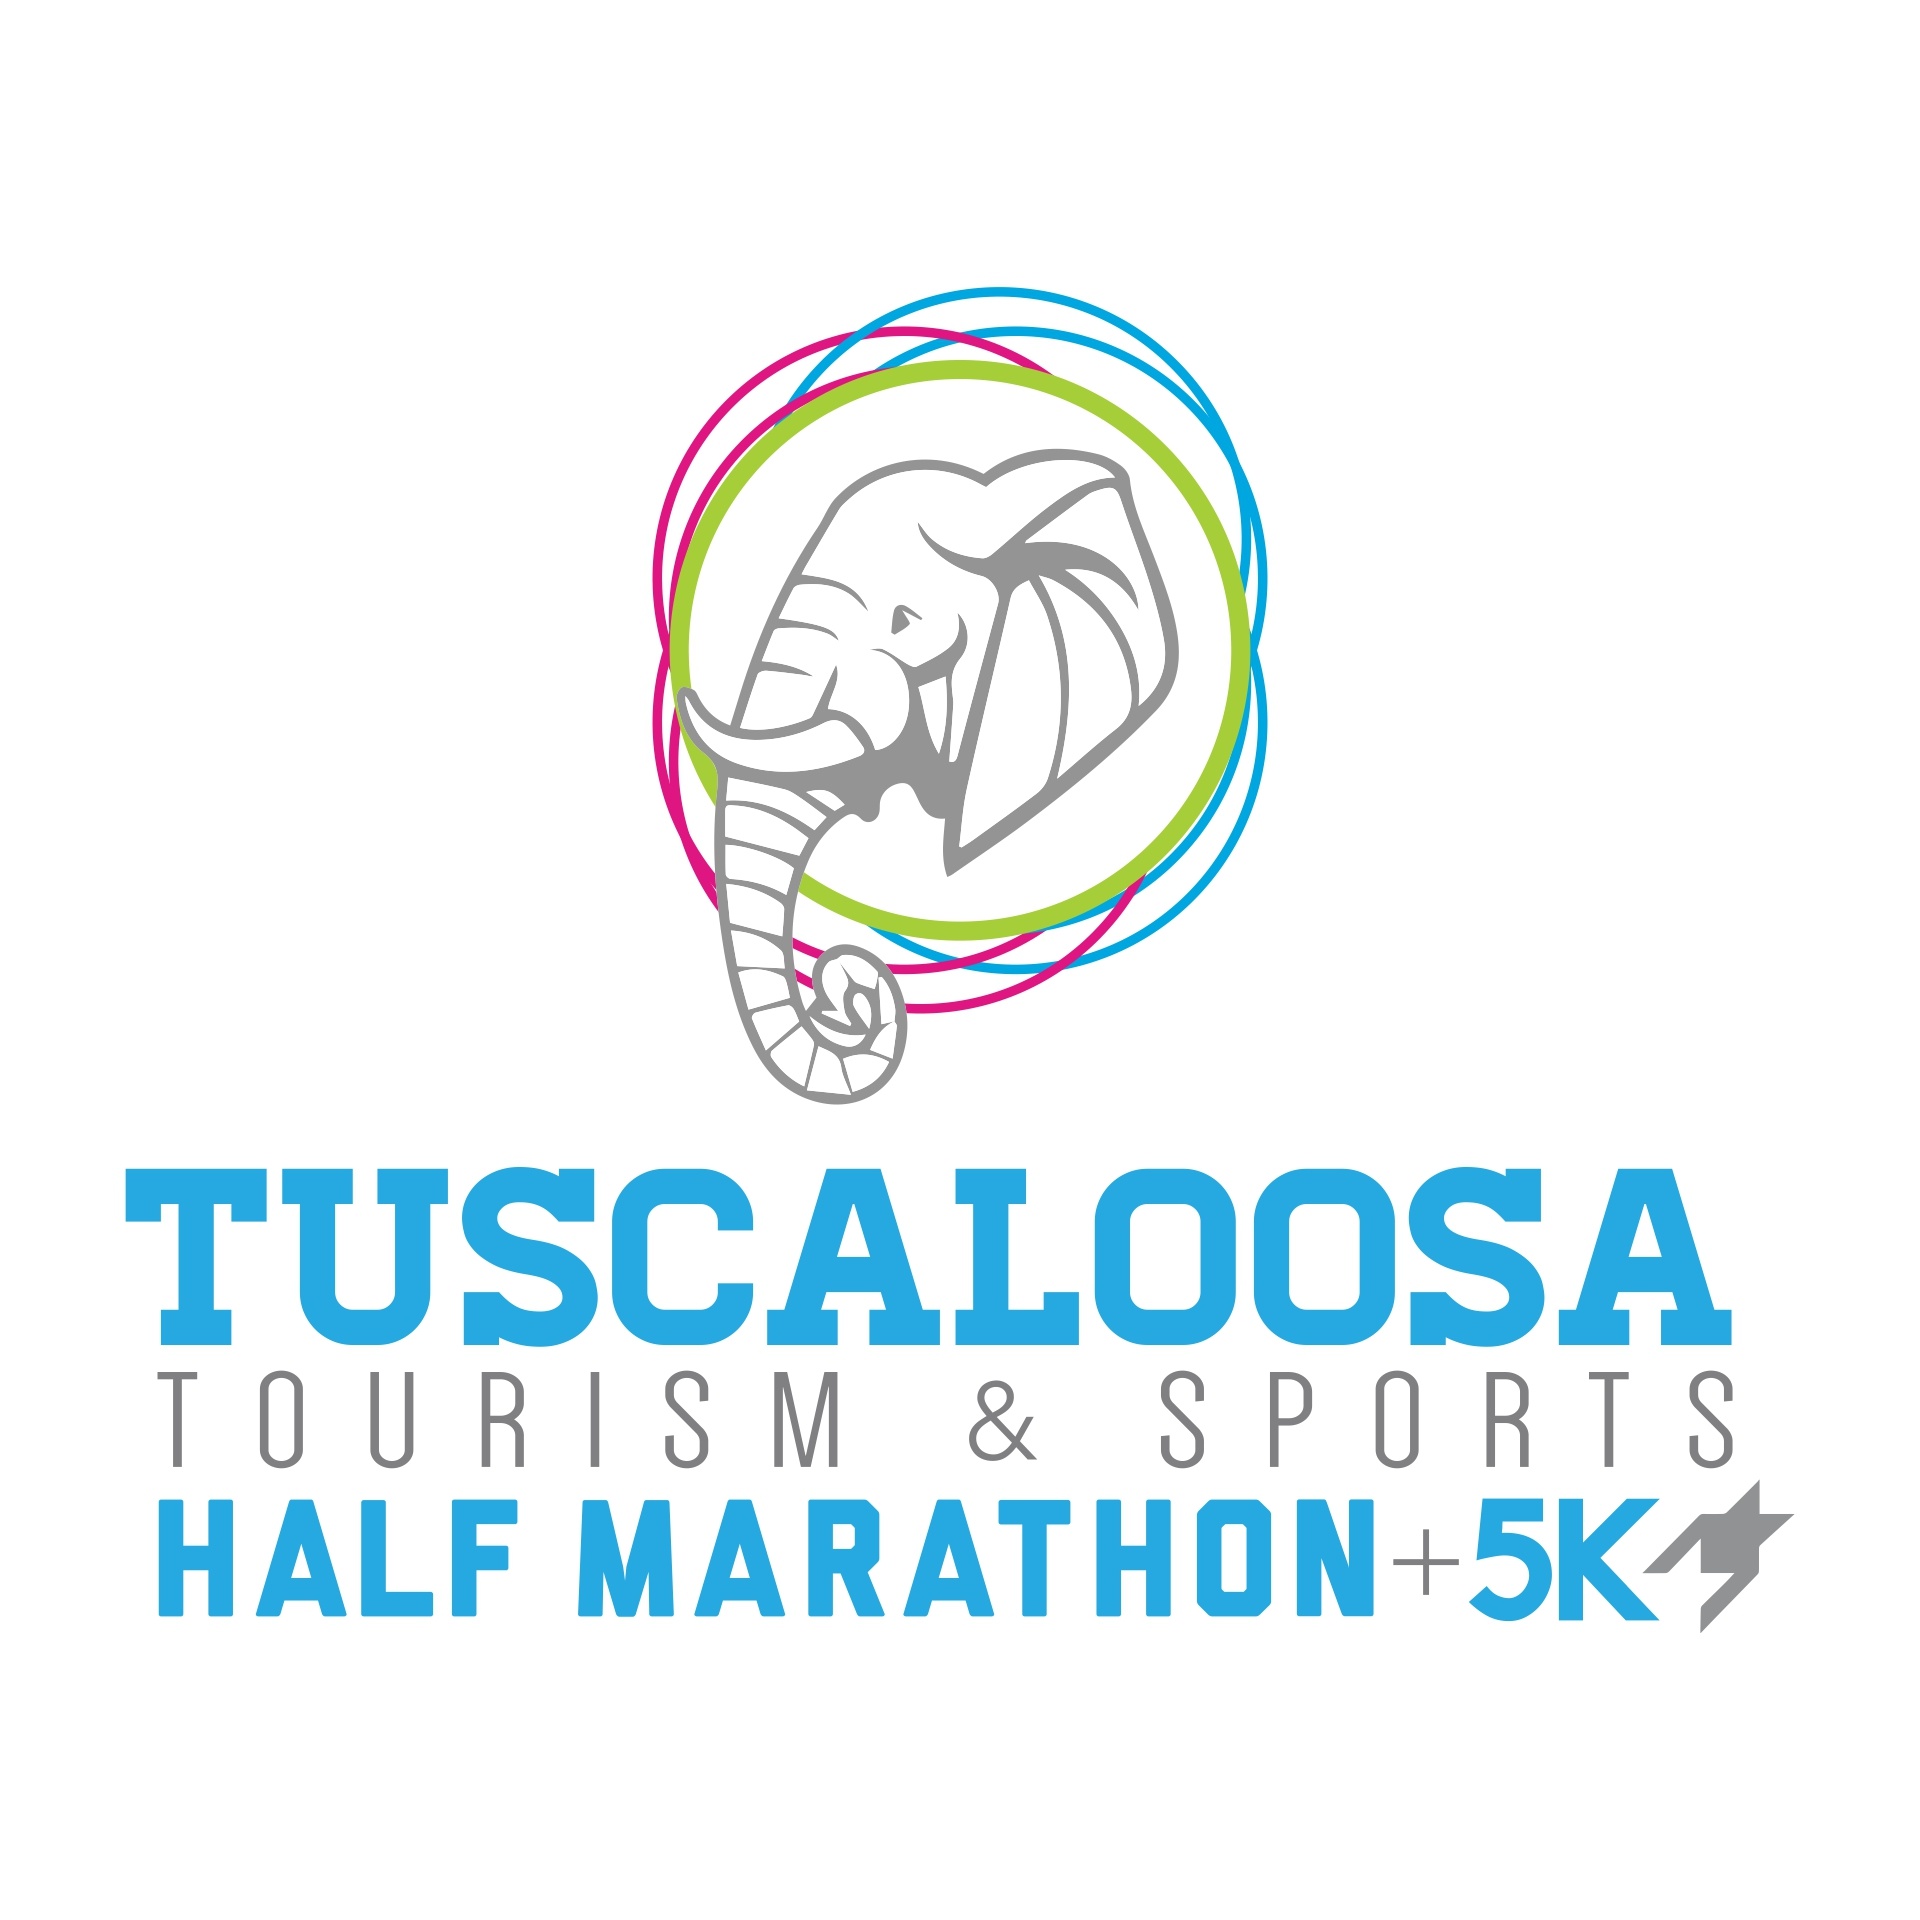 Tuscaloosa Tourism & Sports Half Marathon and Publix 5K returns